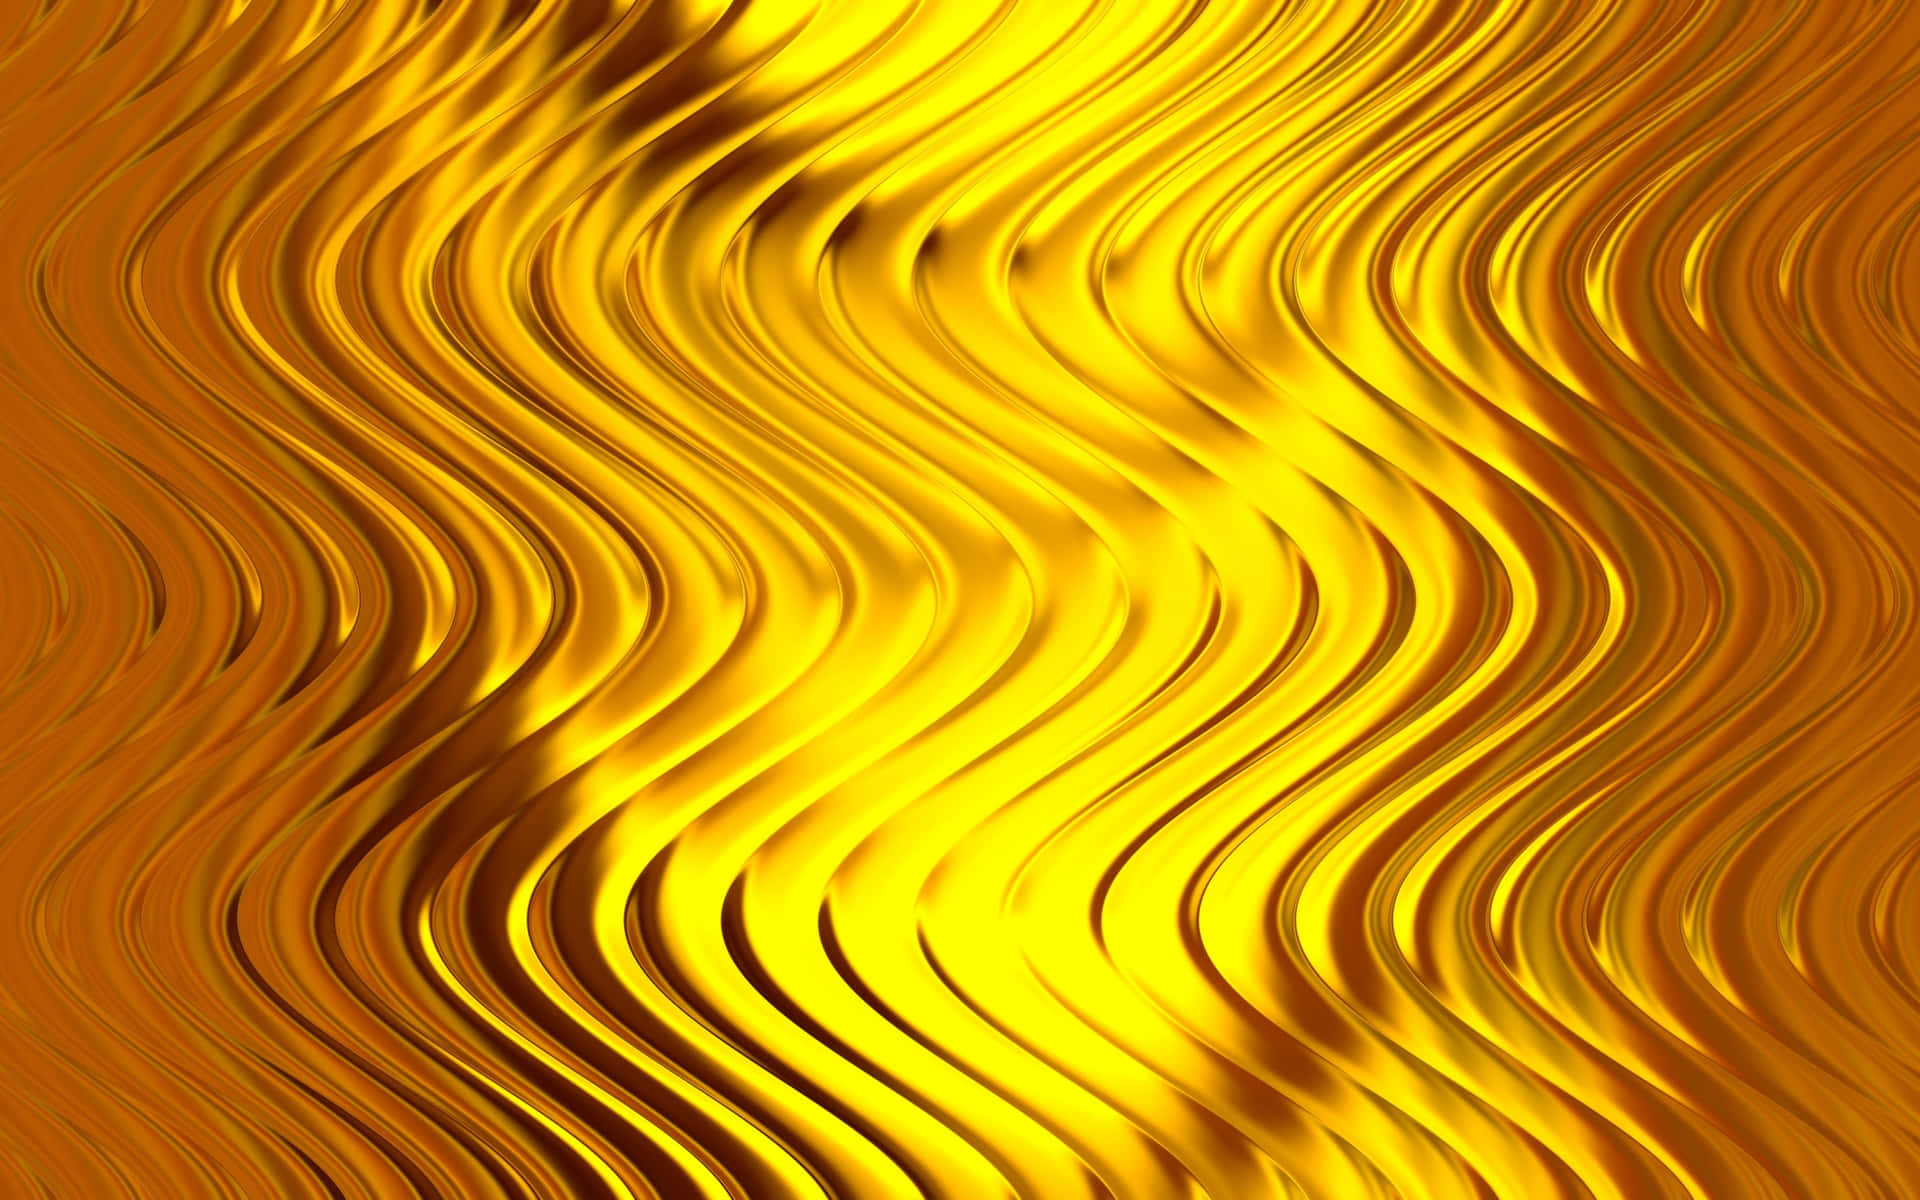 Golden Yellow Wave Patterns Background